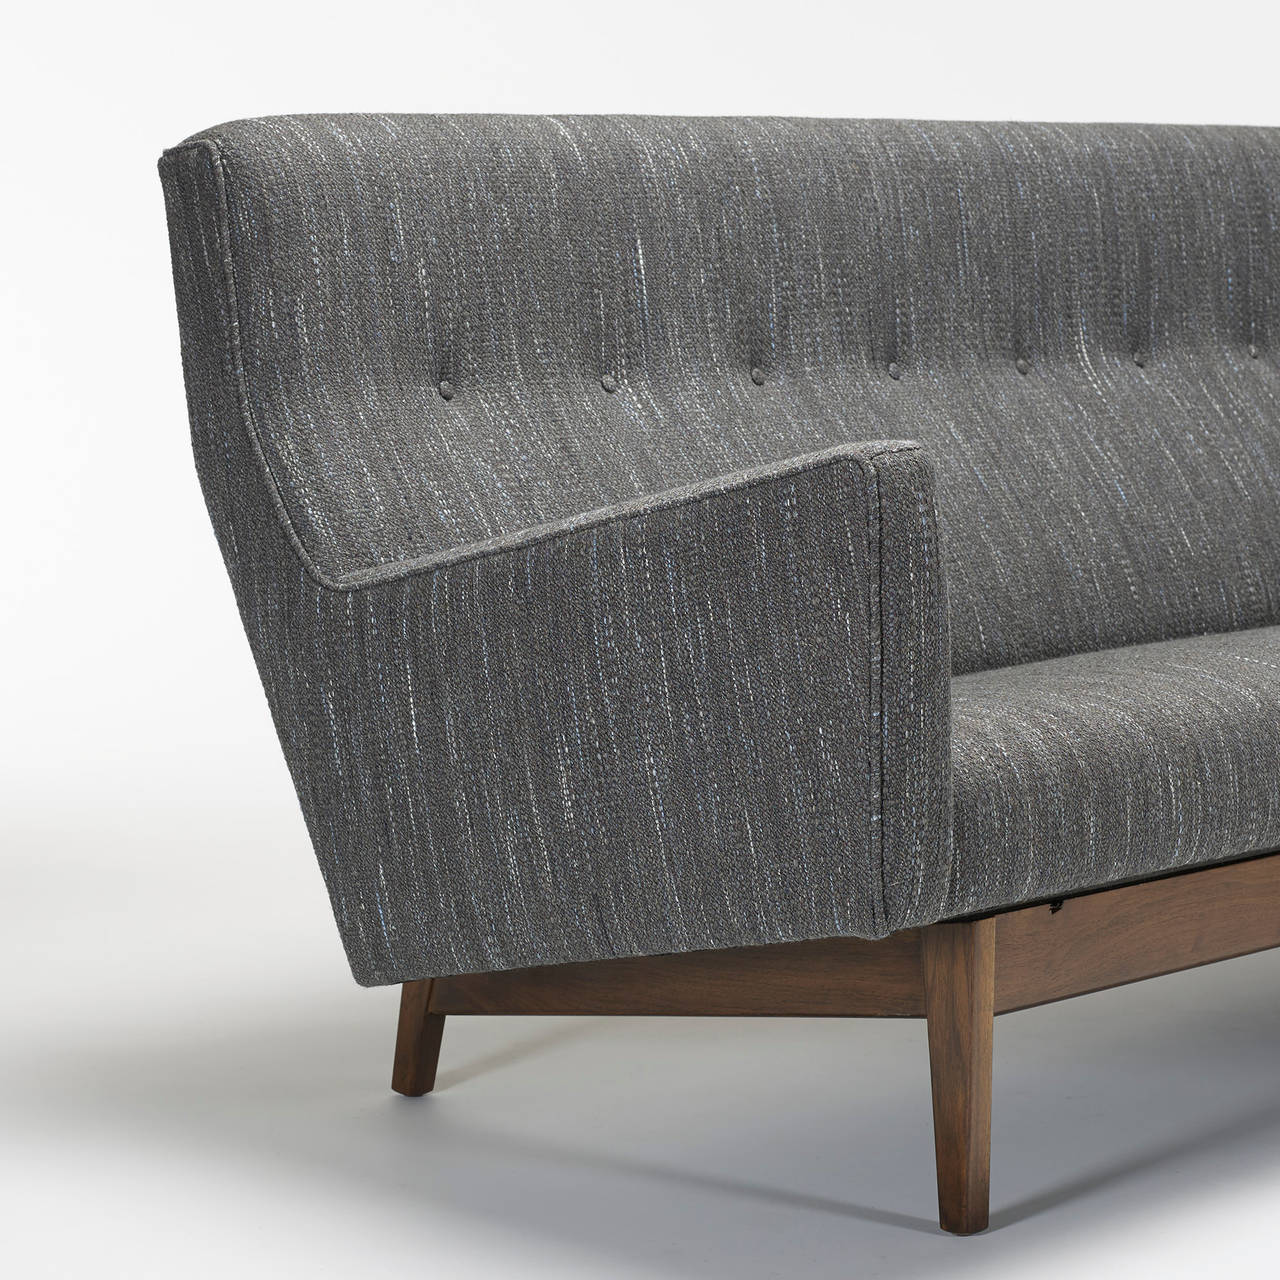 Mid-Century Modern Sofa by Jens Risom for Jens Risom Design, Inc.